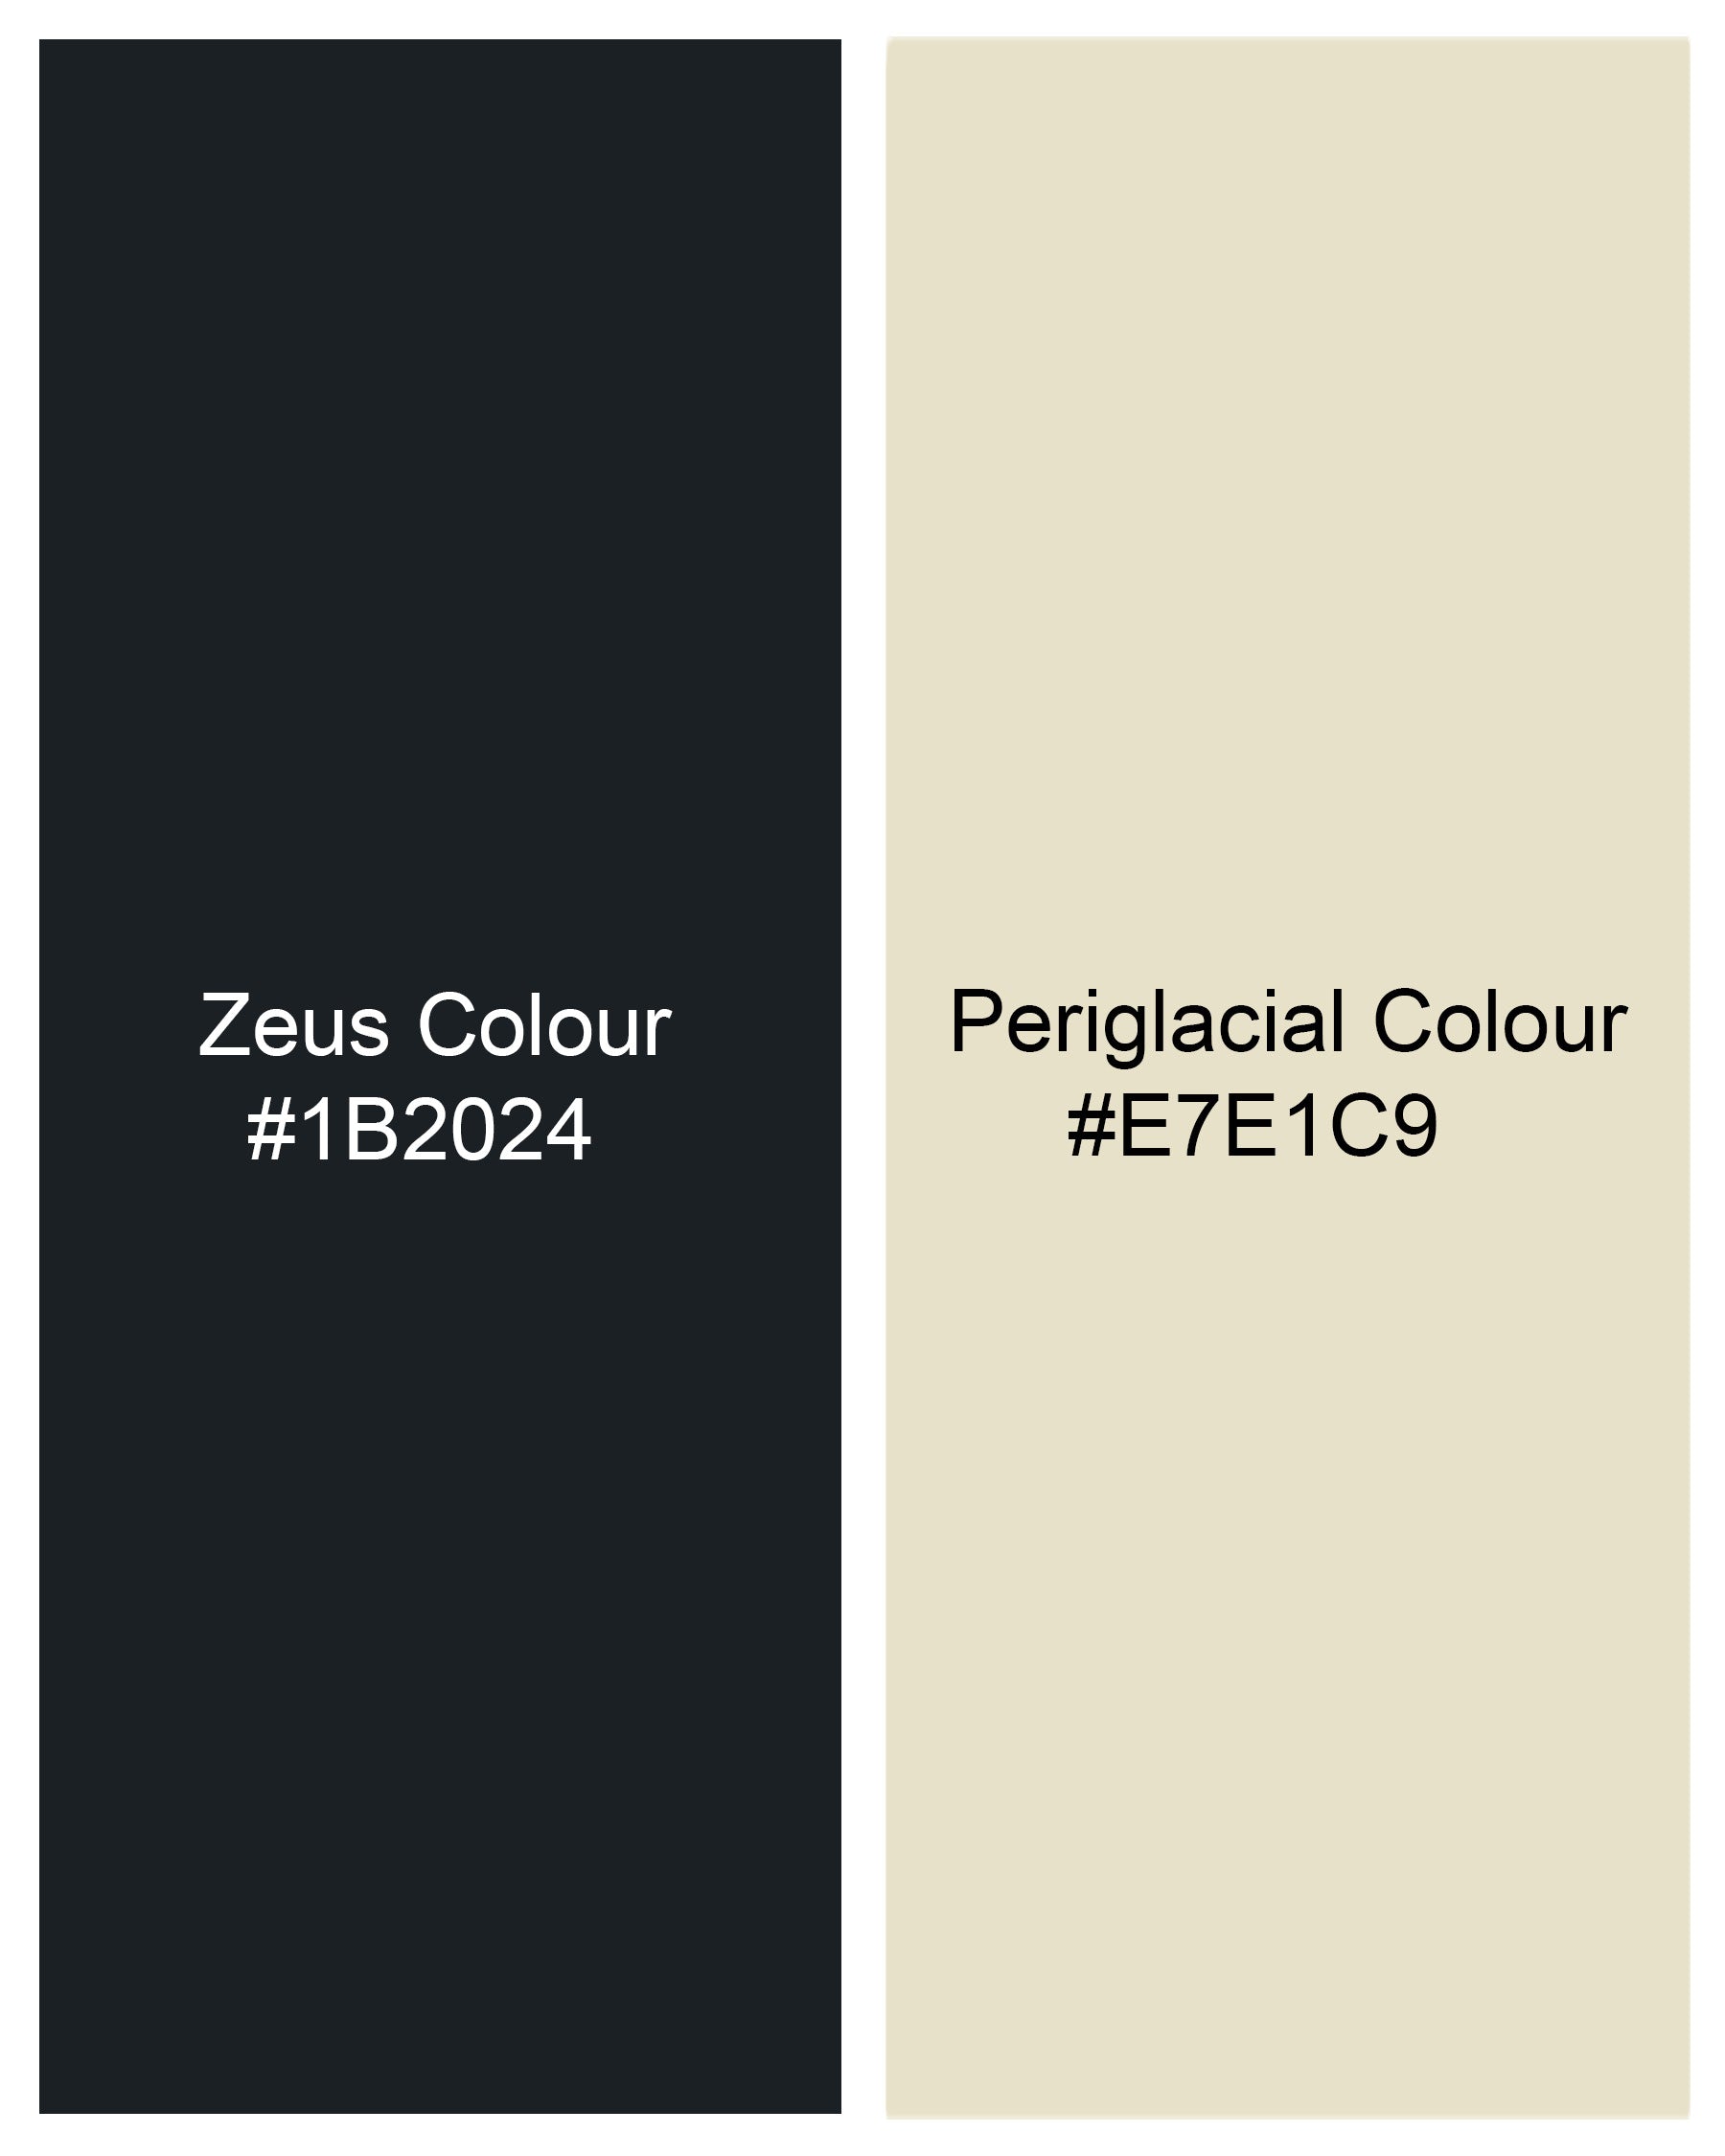 Periglacial Cream with Zeus Black Patch Design Organic Cotton Pique Polo TS598-S, TS598-M, TS598-L, TS598-XL, TS598-XXL, TS598-3XL, TS598-4XL